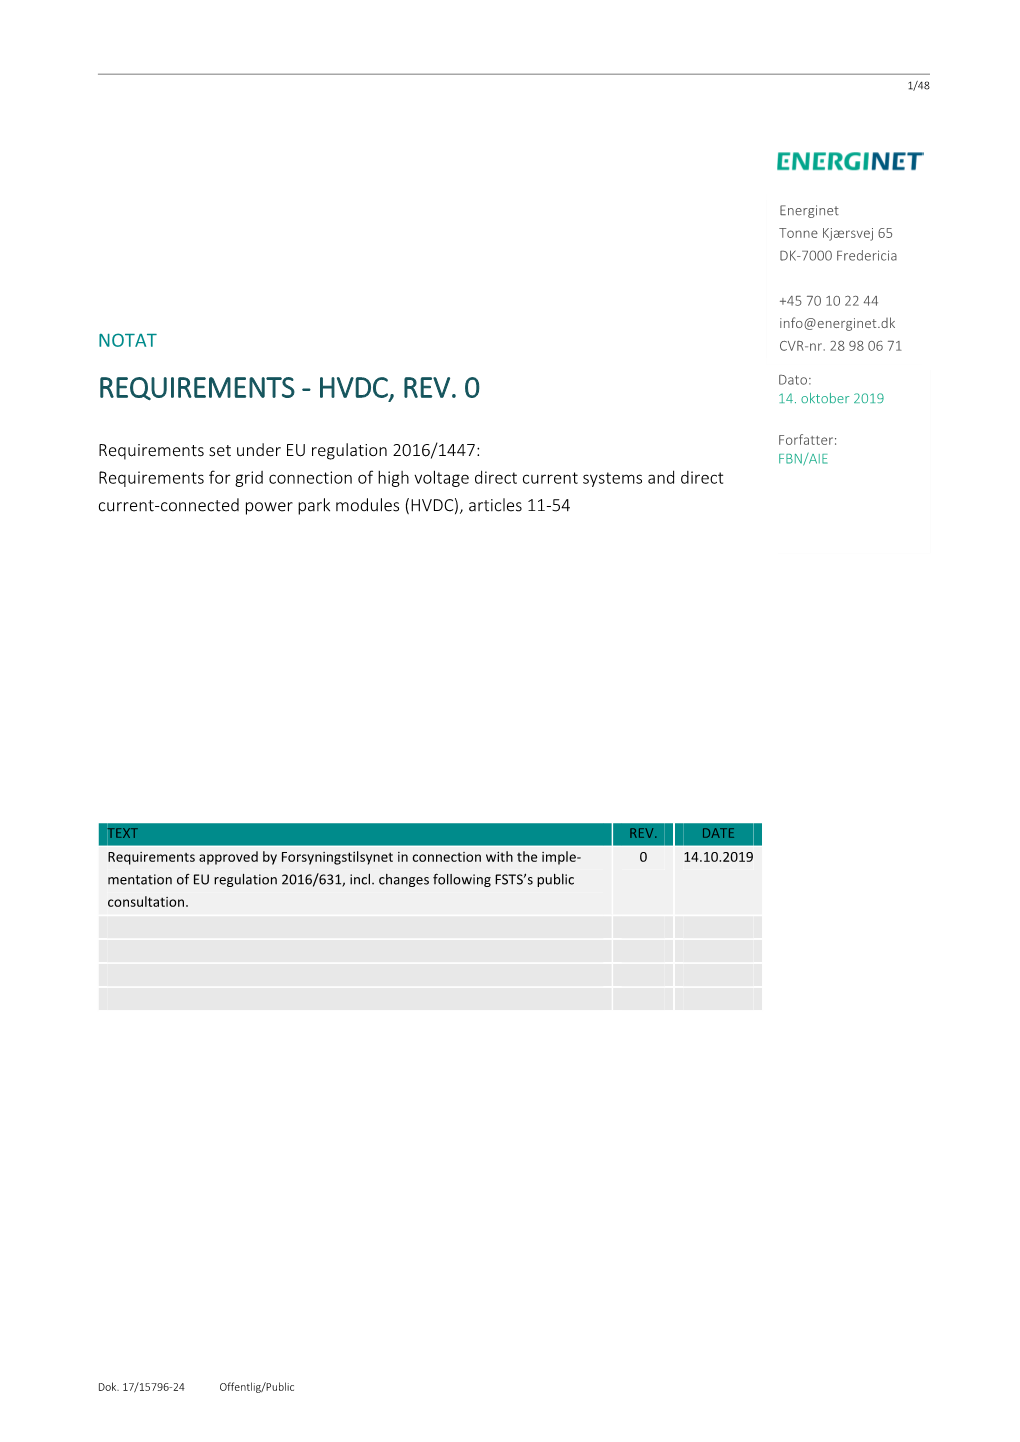 Requirements - Hvdc, Rev